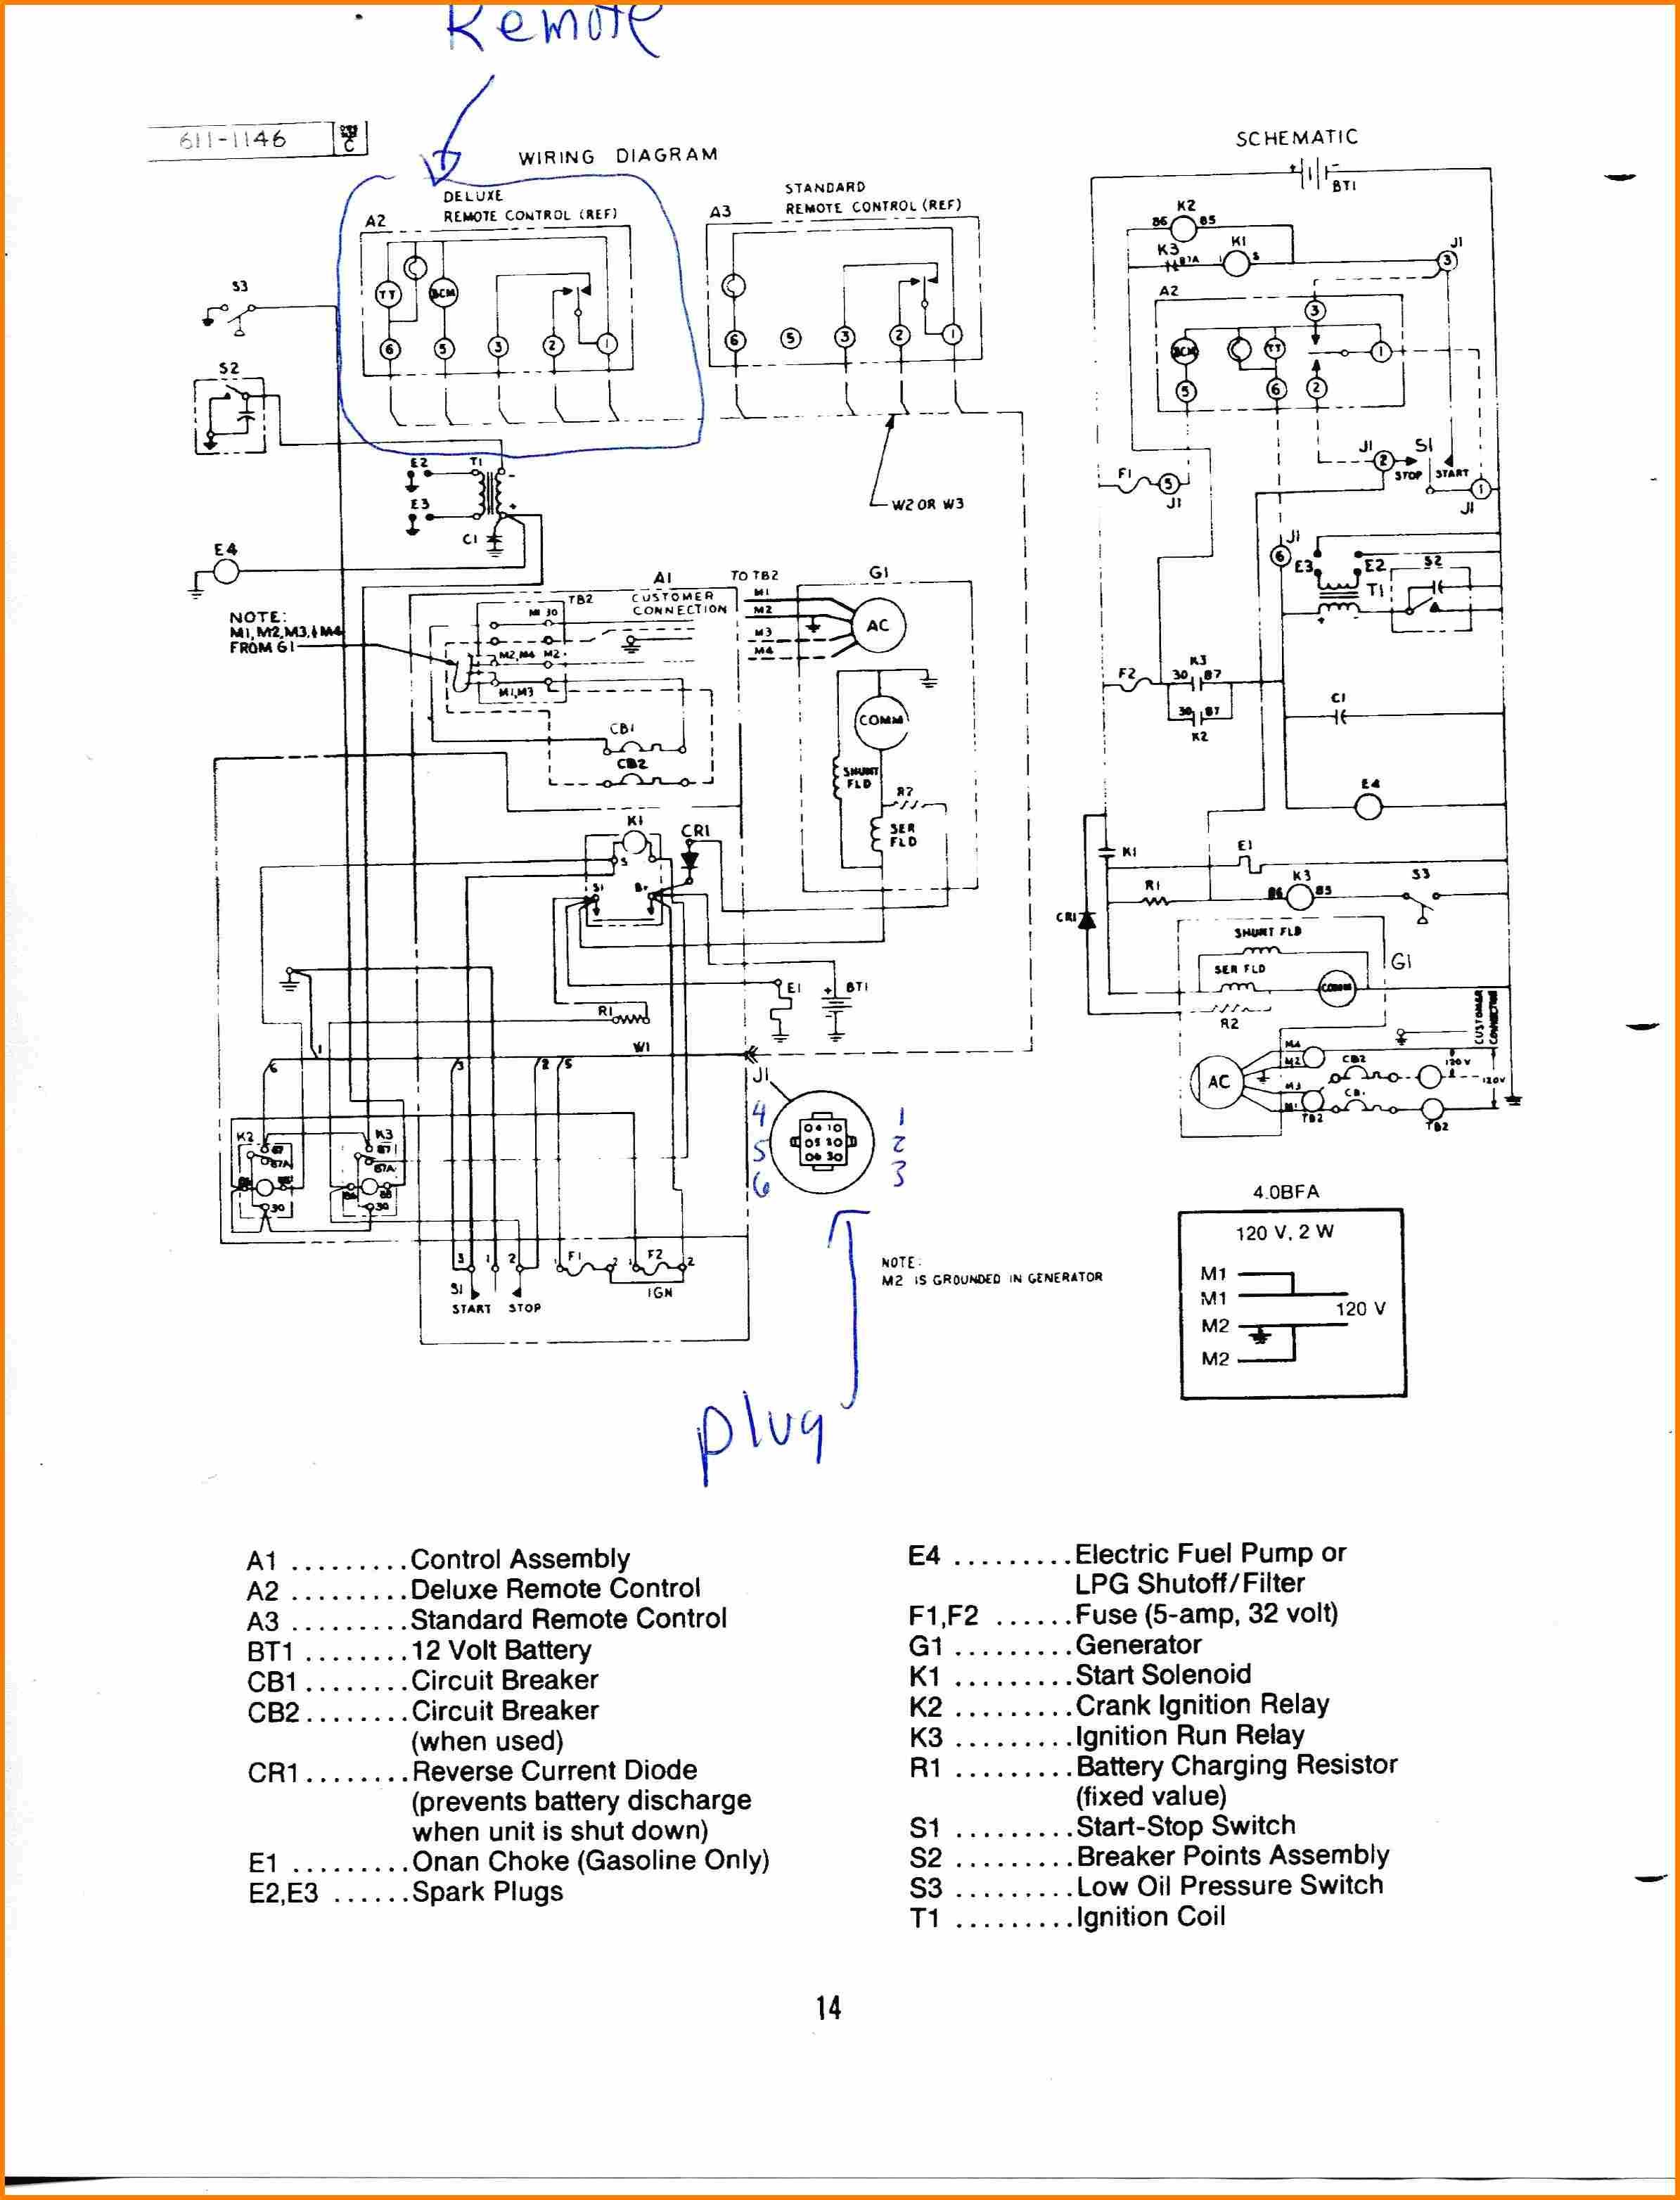 Onan Rv Generator Wiring Diagram 5 Caterpillar Emcp 2 Wiring Diagram Cable An Rv Generator Image Of Onan Rv Generator Wiring Diagram